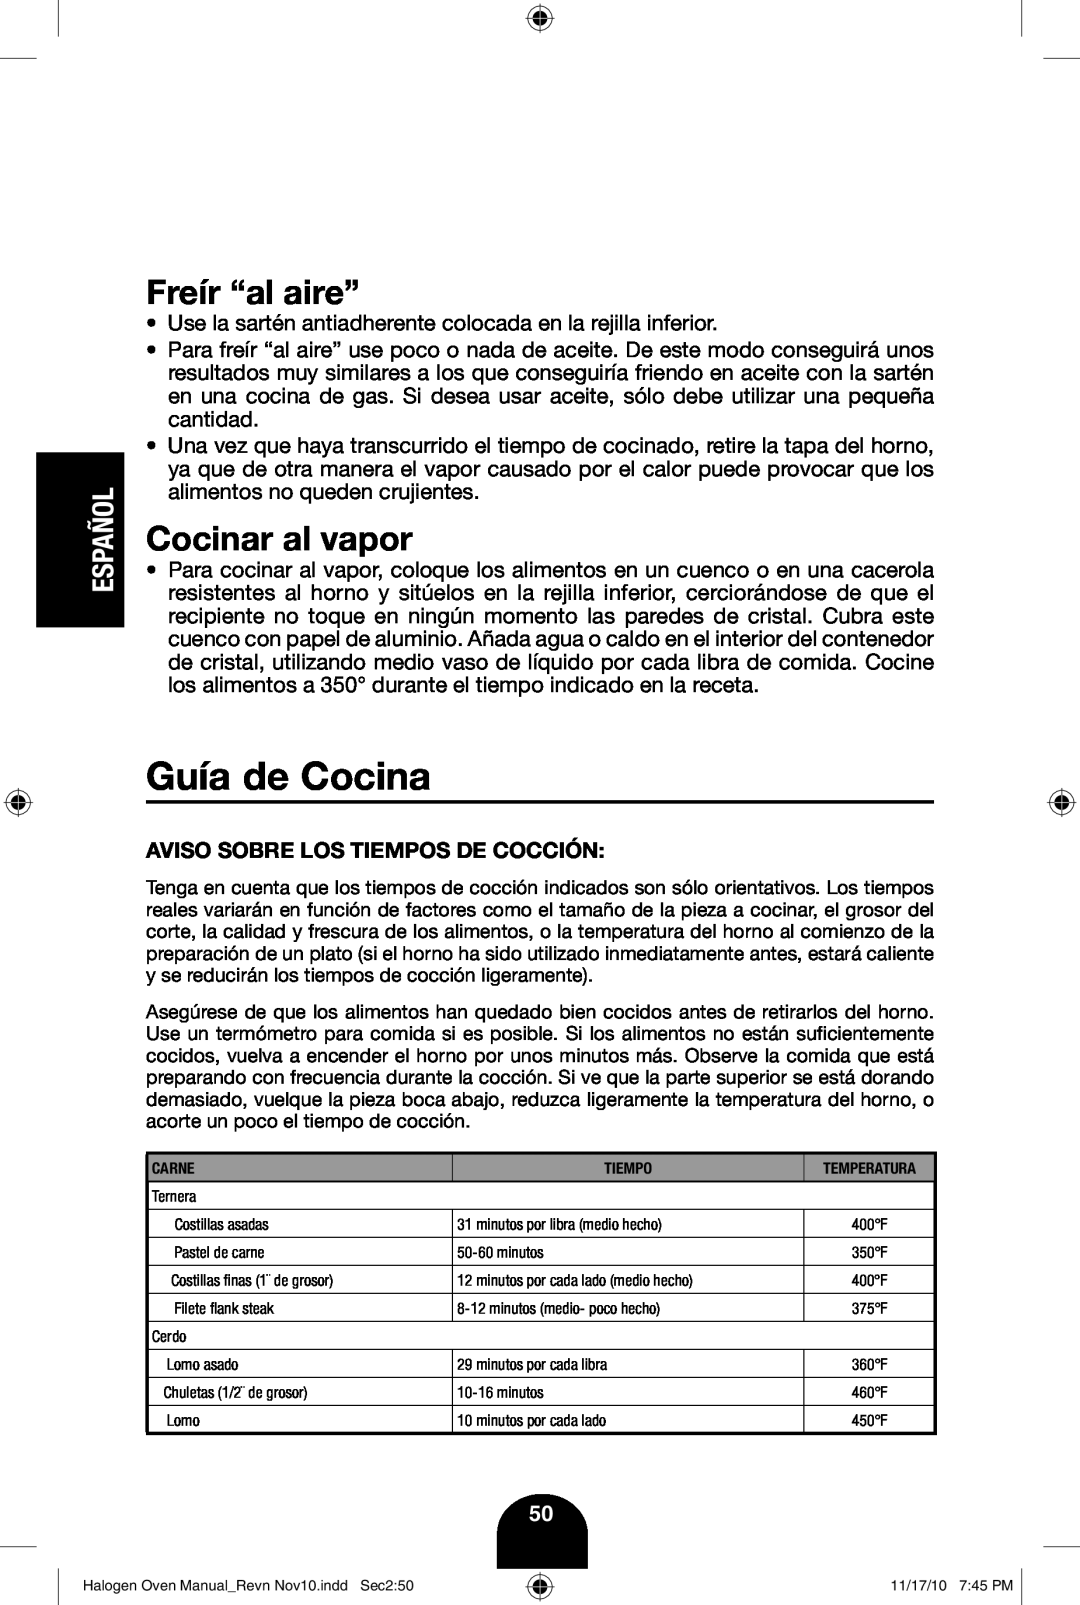 Fagor America 670040380 user manual Guía de Cocina, Freír “al aire”, Cocinar al vapor, Español 